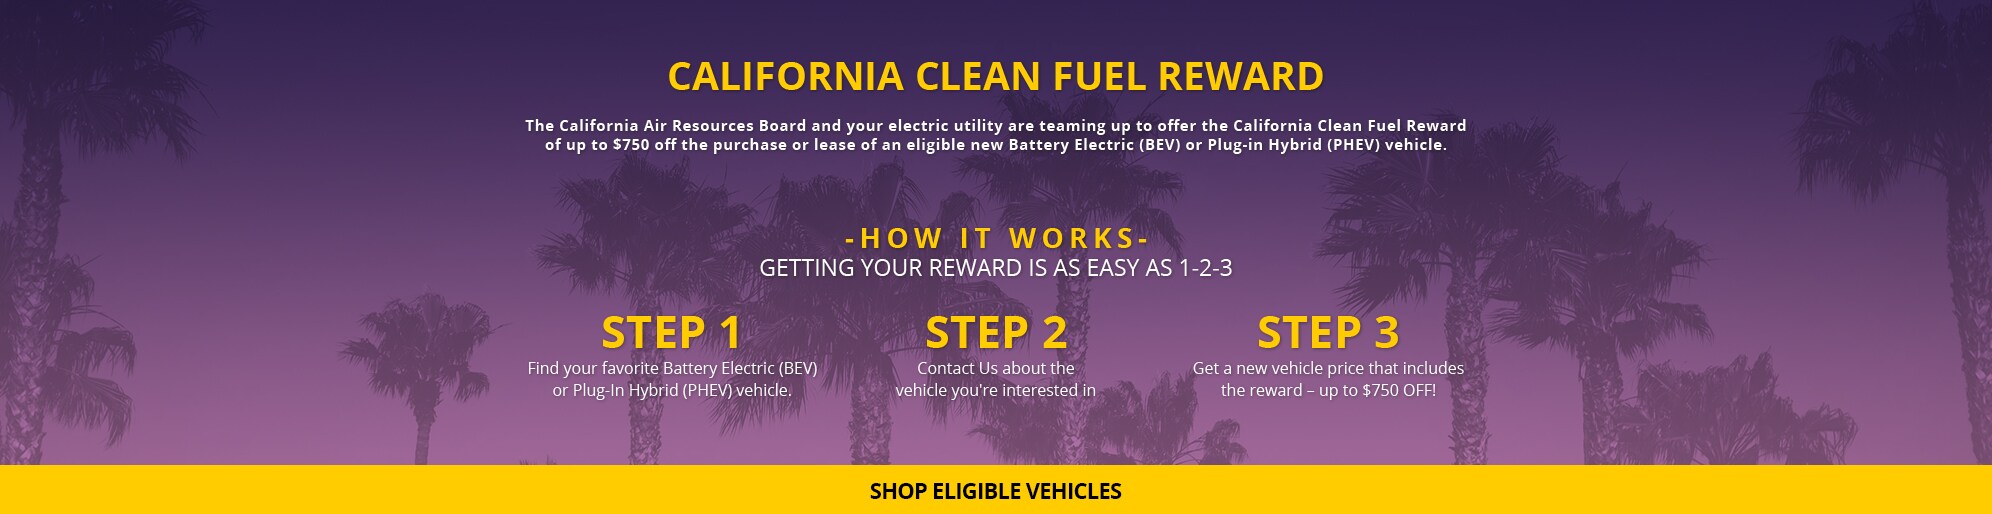 California Clean Fuel Reward Banner